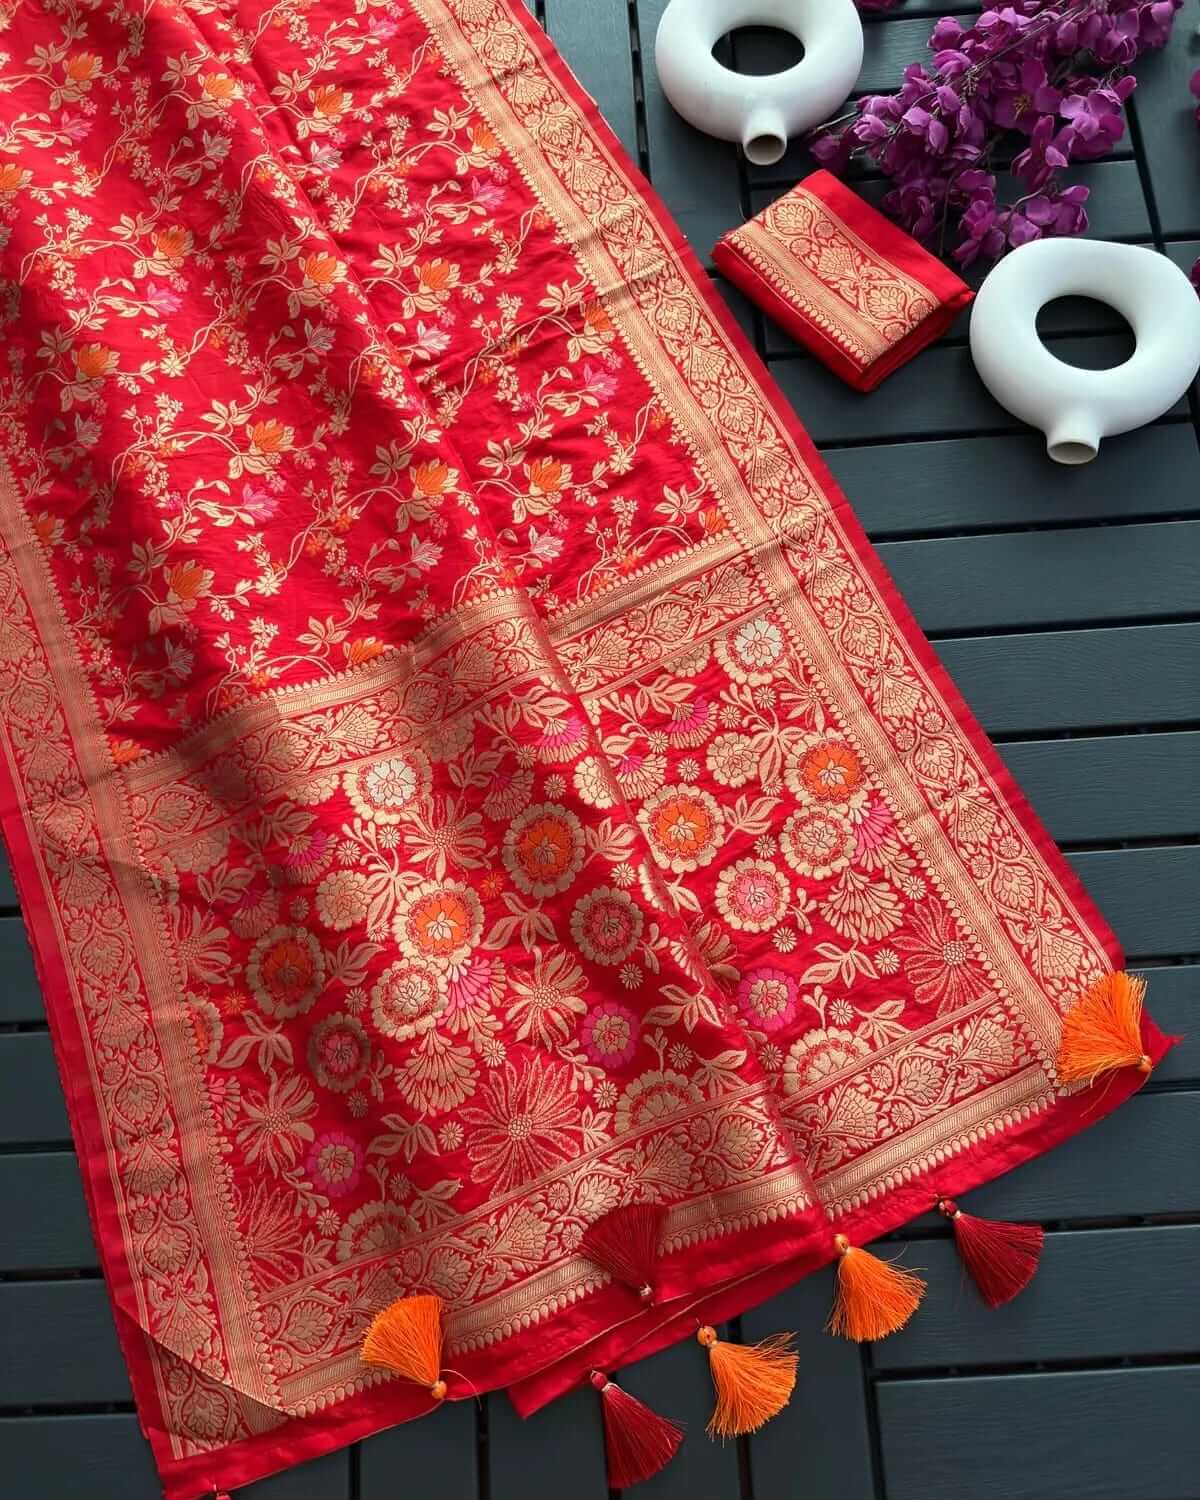 Red Sari For dura puja